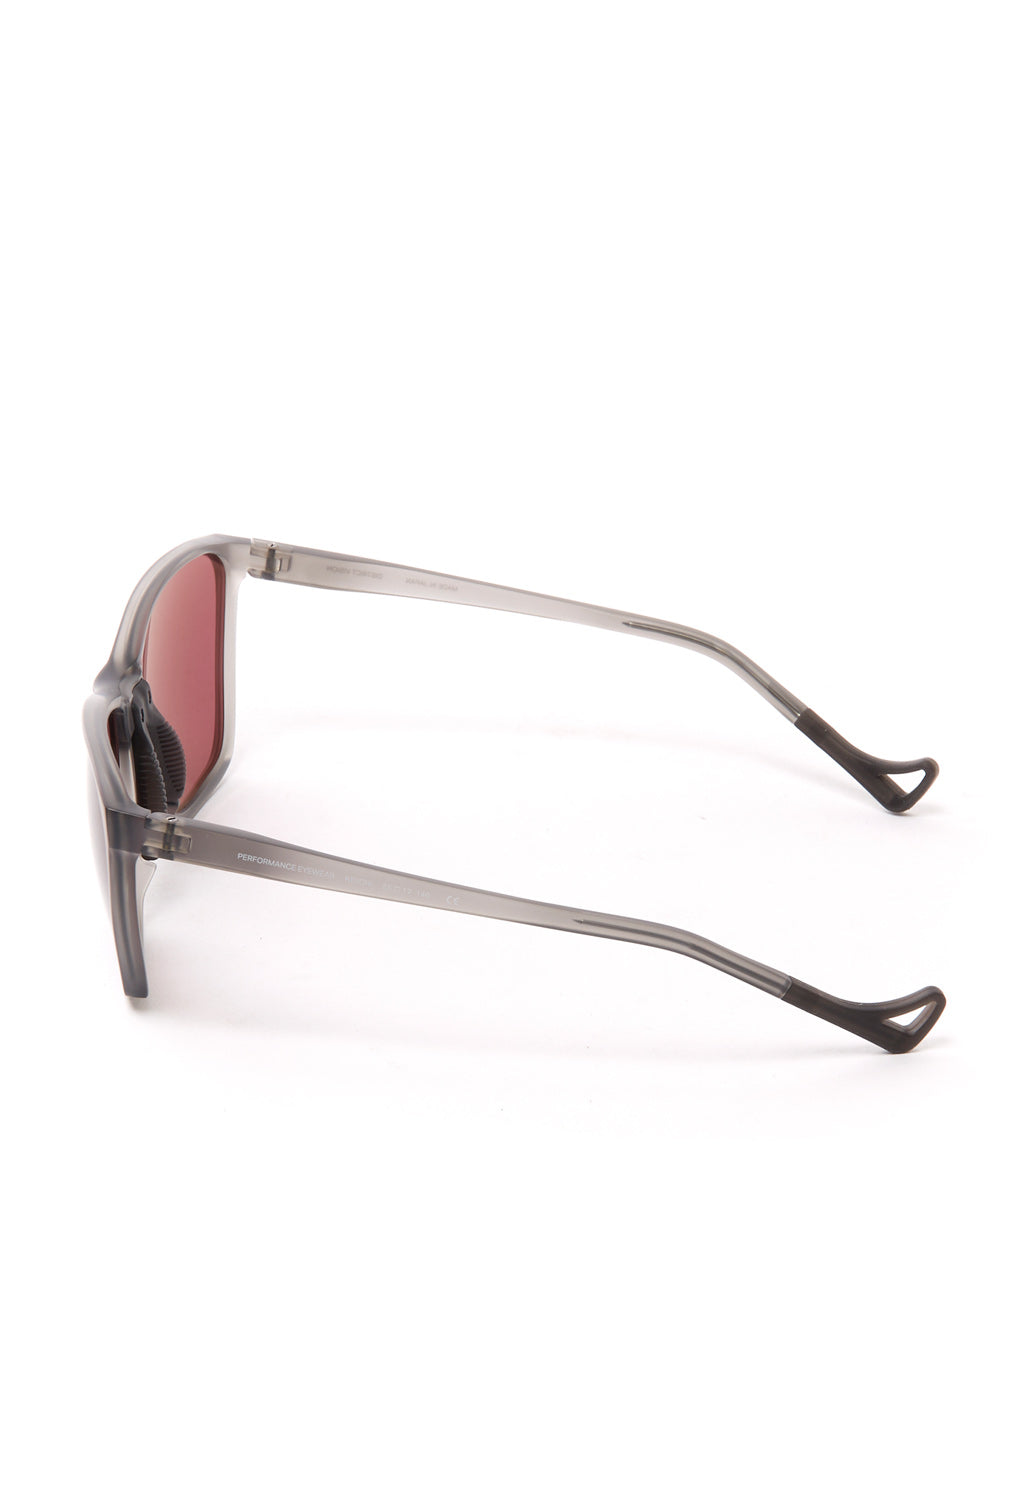 District Vision Keiichi Sunglasses - Black Rose